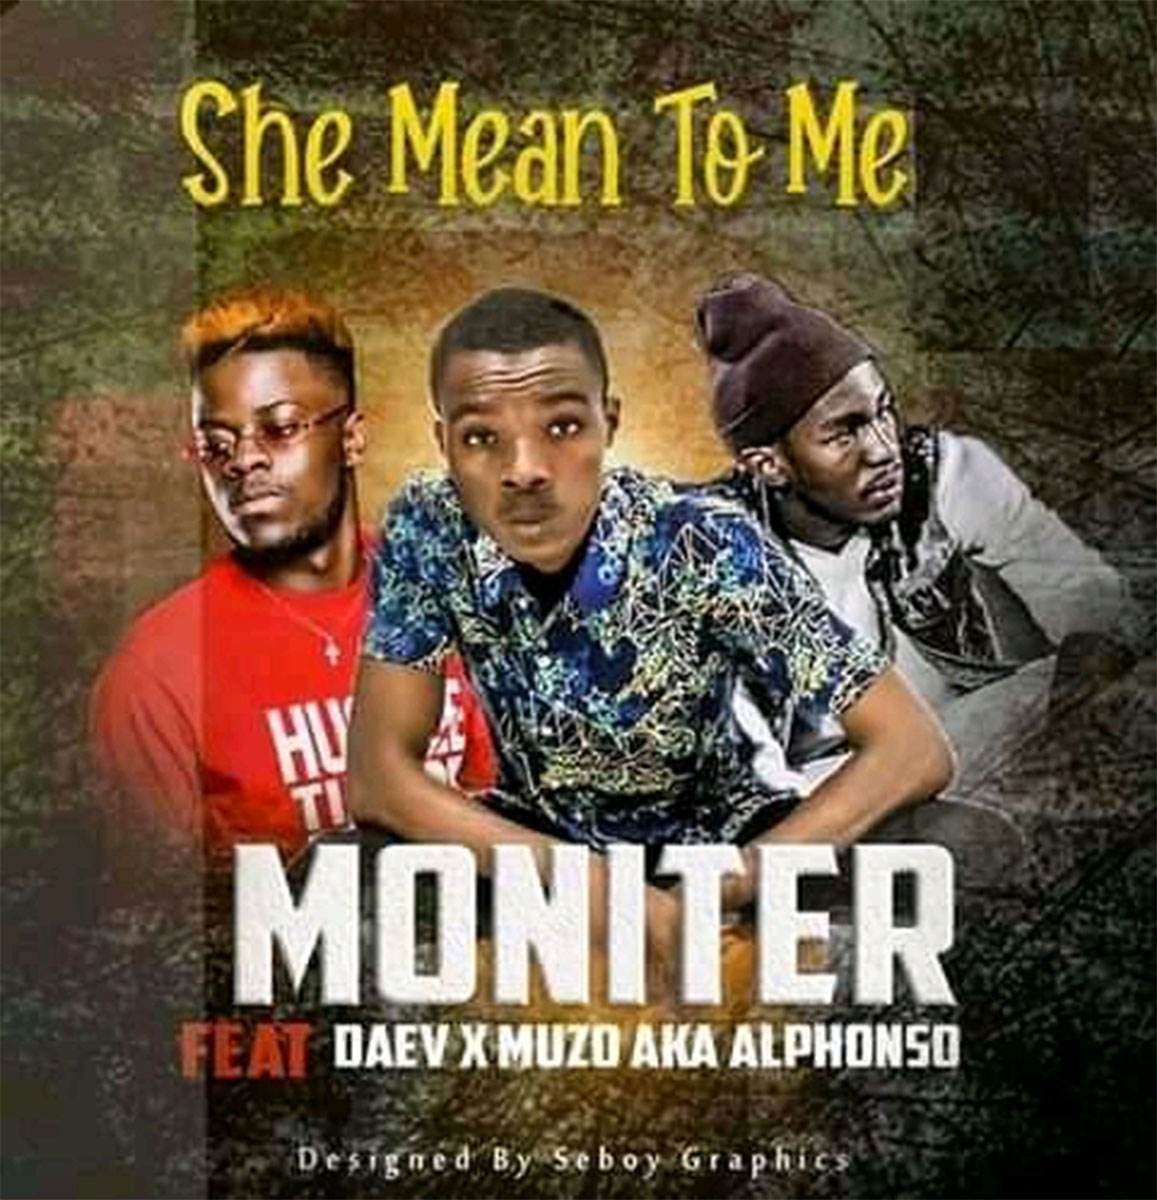 Moniter ft. Daev & Muzo AKA Alphonso - She Mean To Me